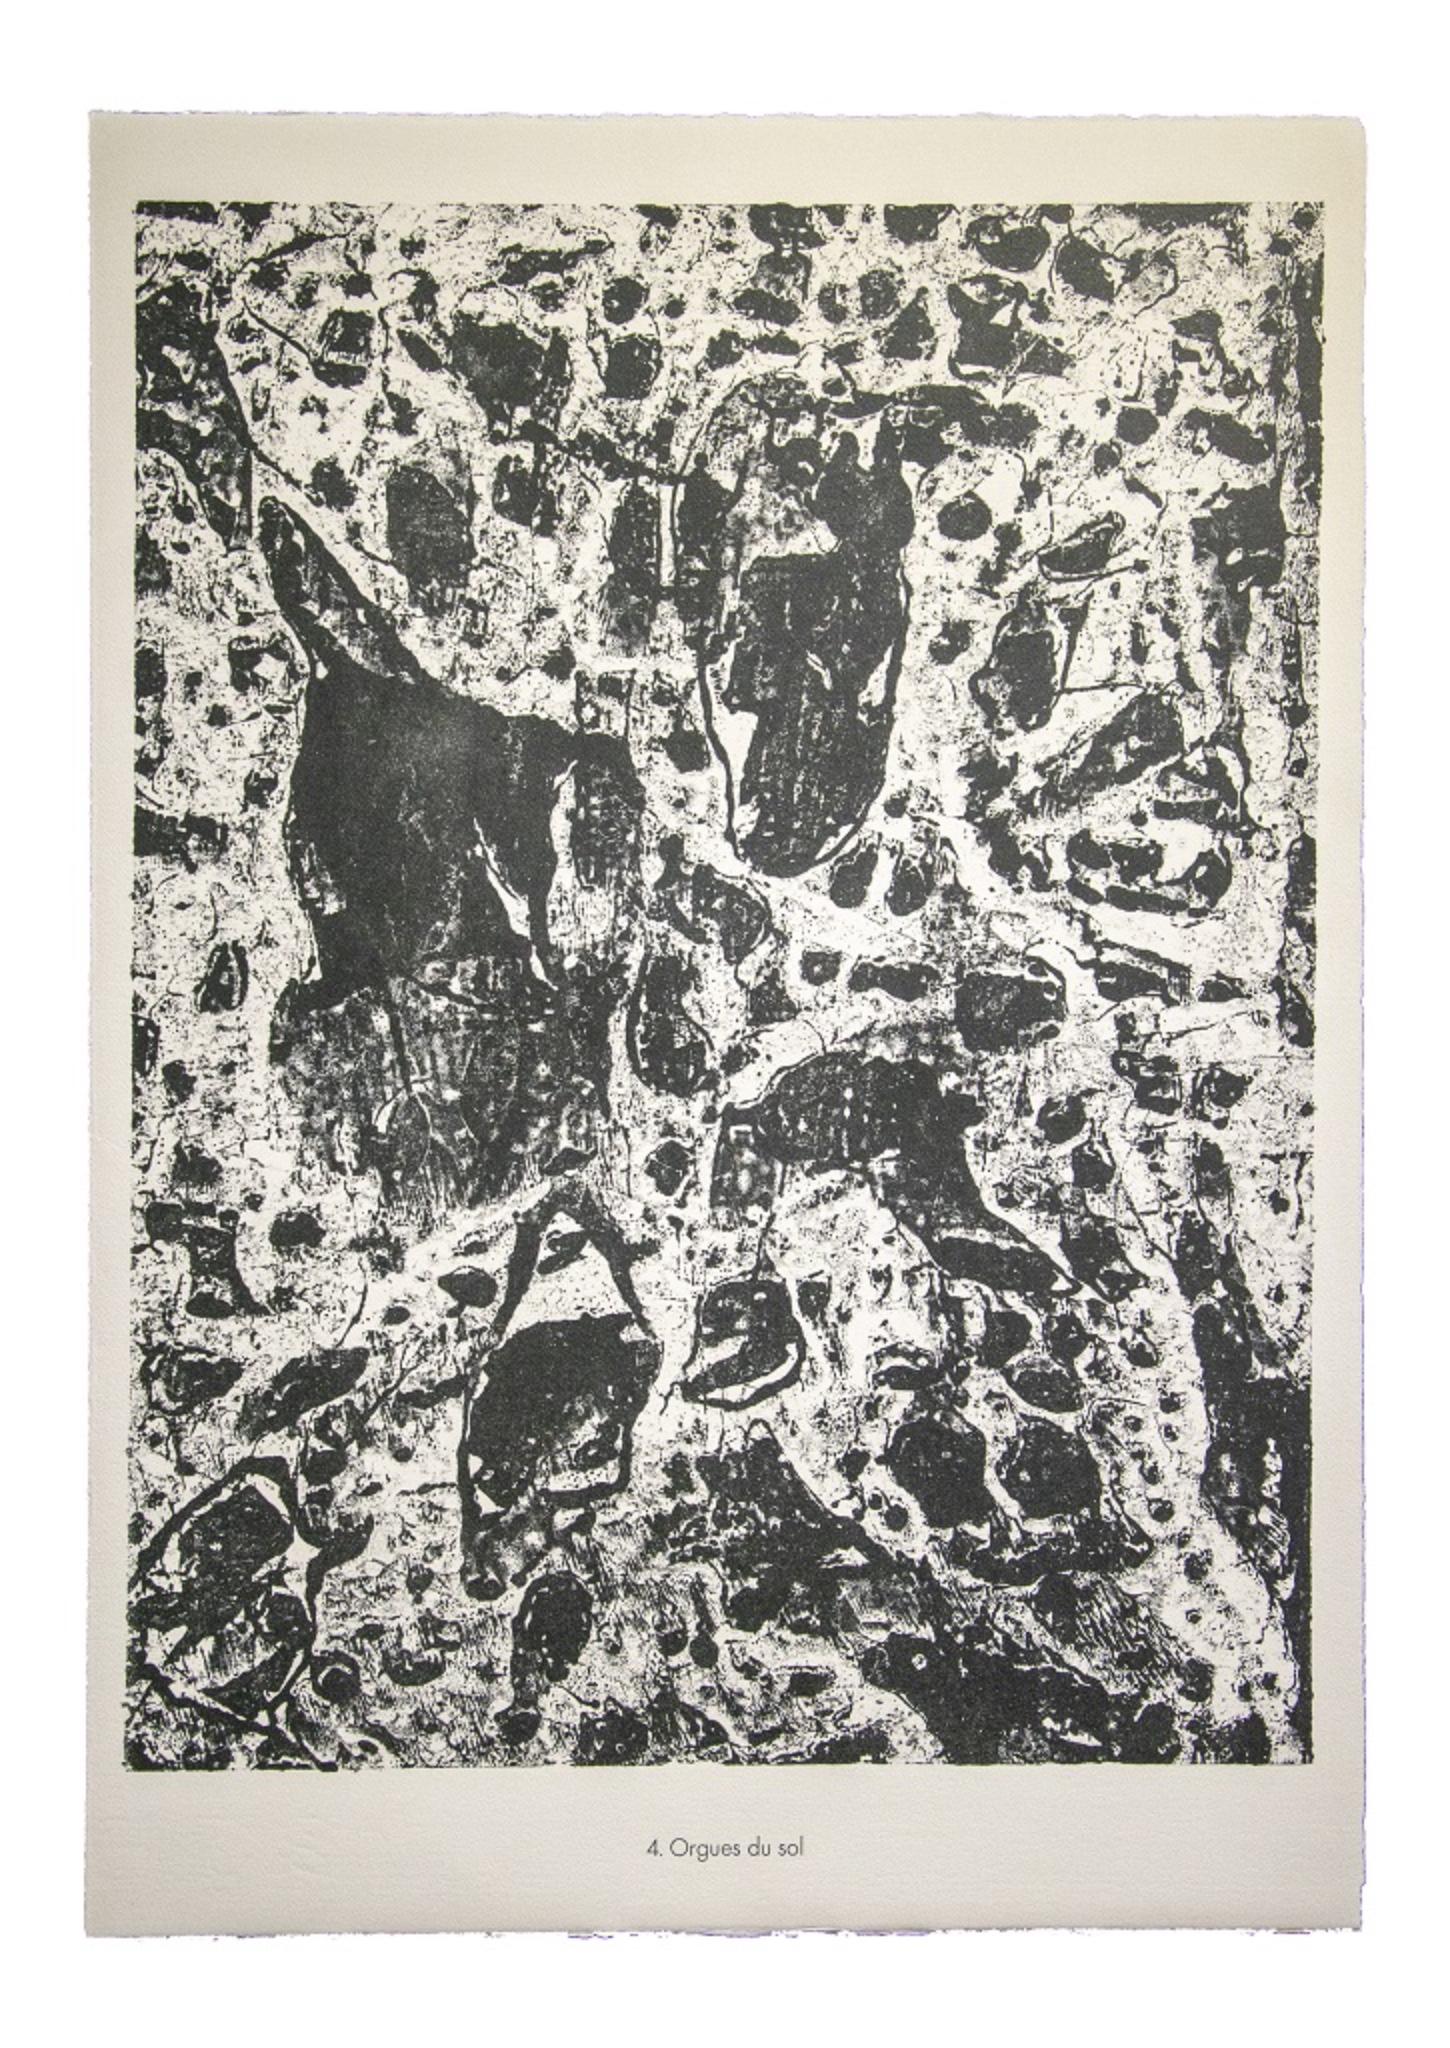 Jean Dubuffet Abstract Print - Orgues du Sol - From Eaux, Pierres, Sable - Original Lithograph by Jean D.- 1959